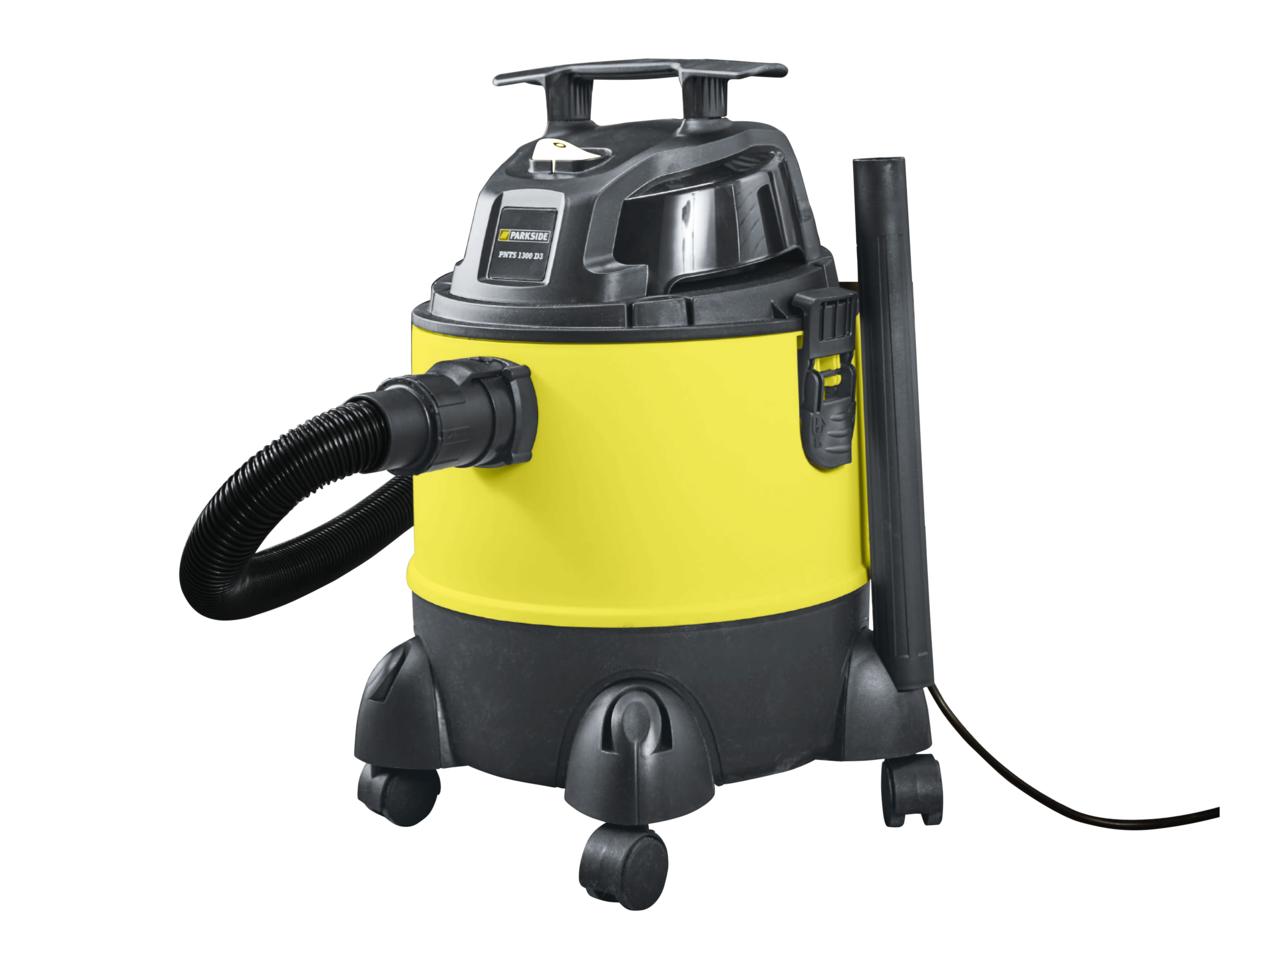 PARKSIDE(R) 1300W Wet & Dry Vacuum Cleaner